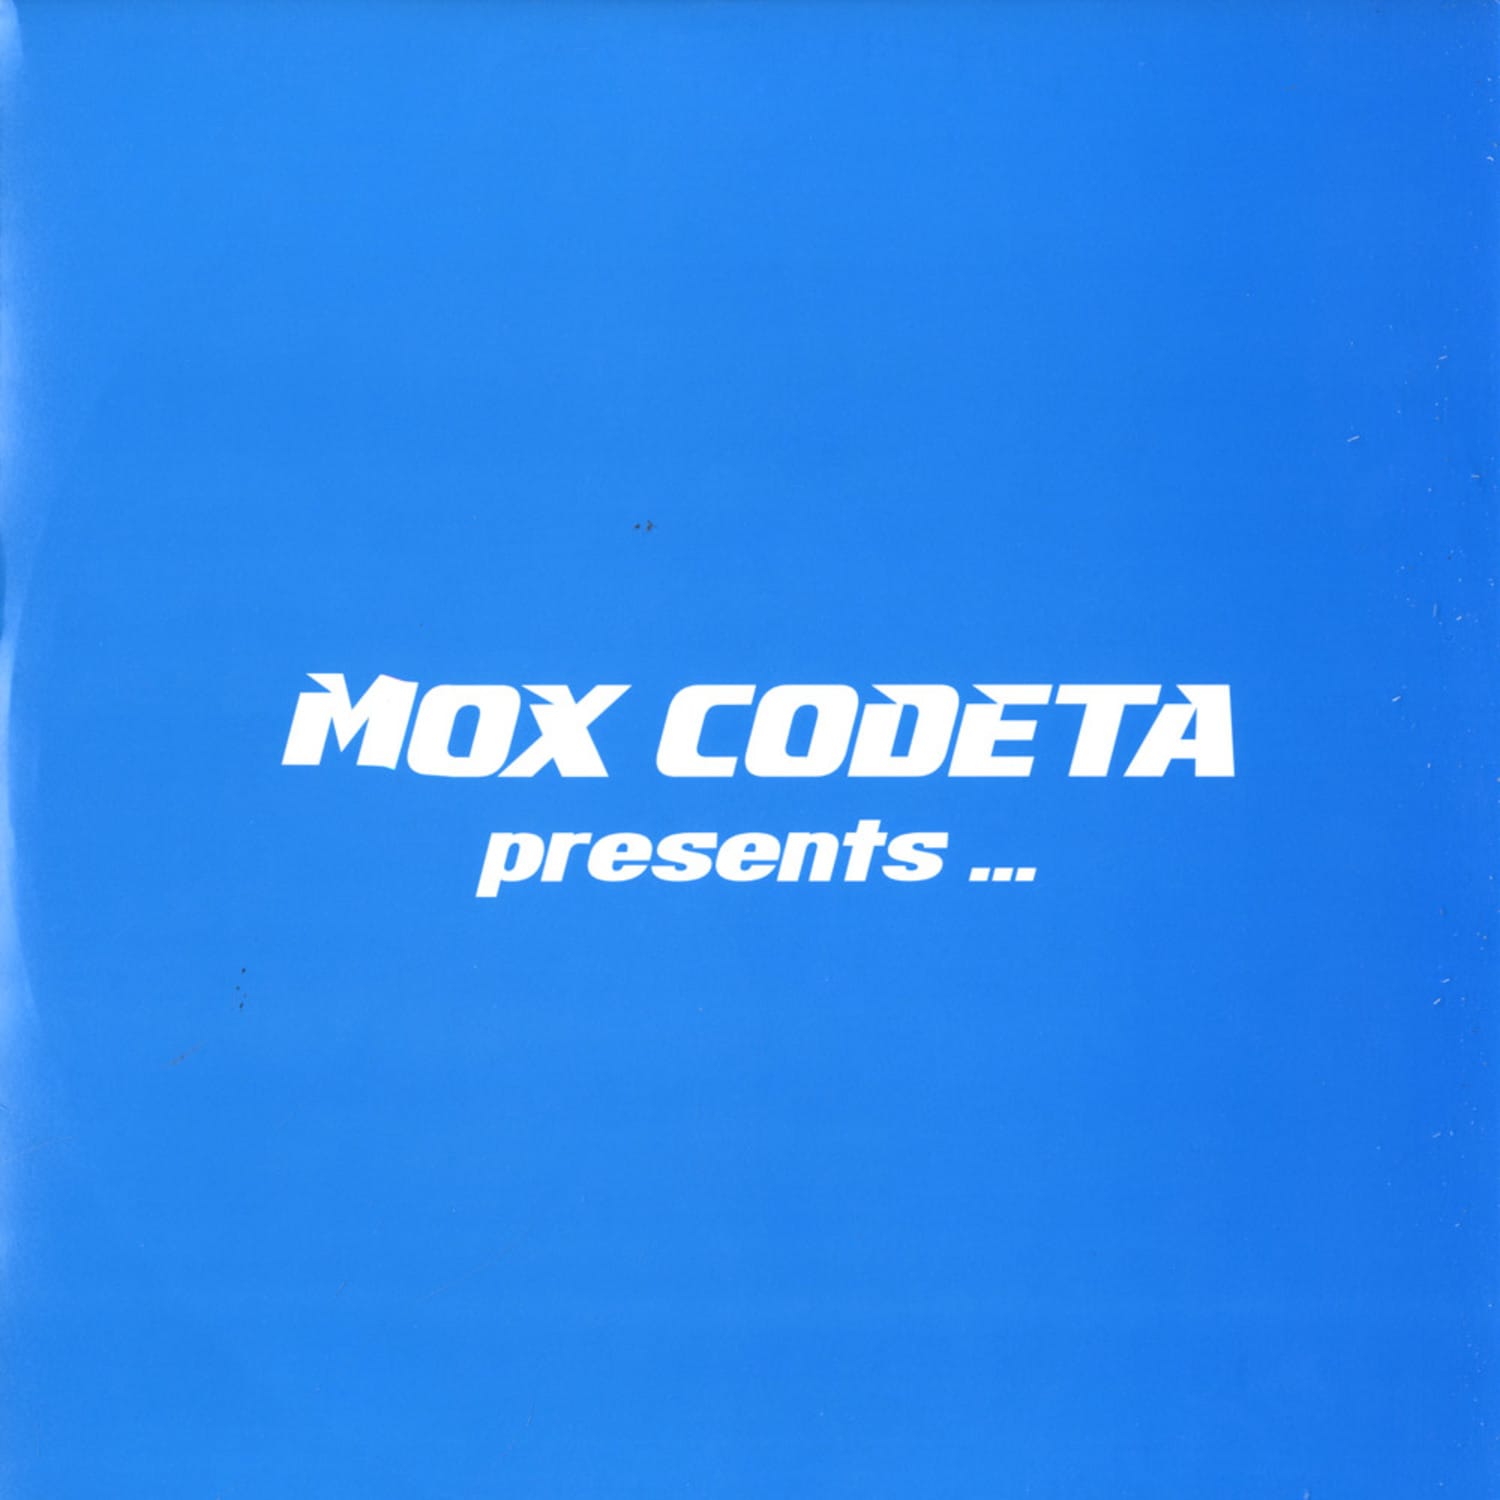 Mox Codeta - MINIMOX AND WORK PLACEMENT